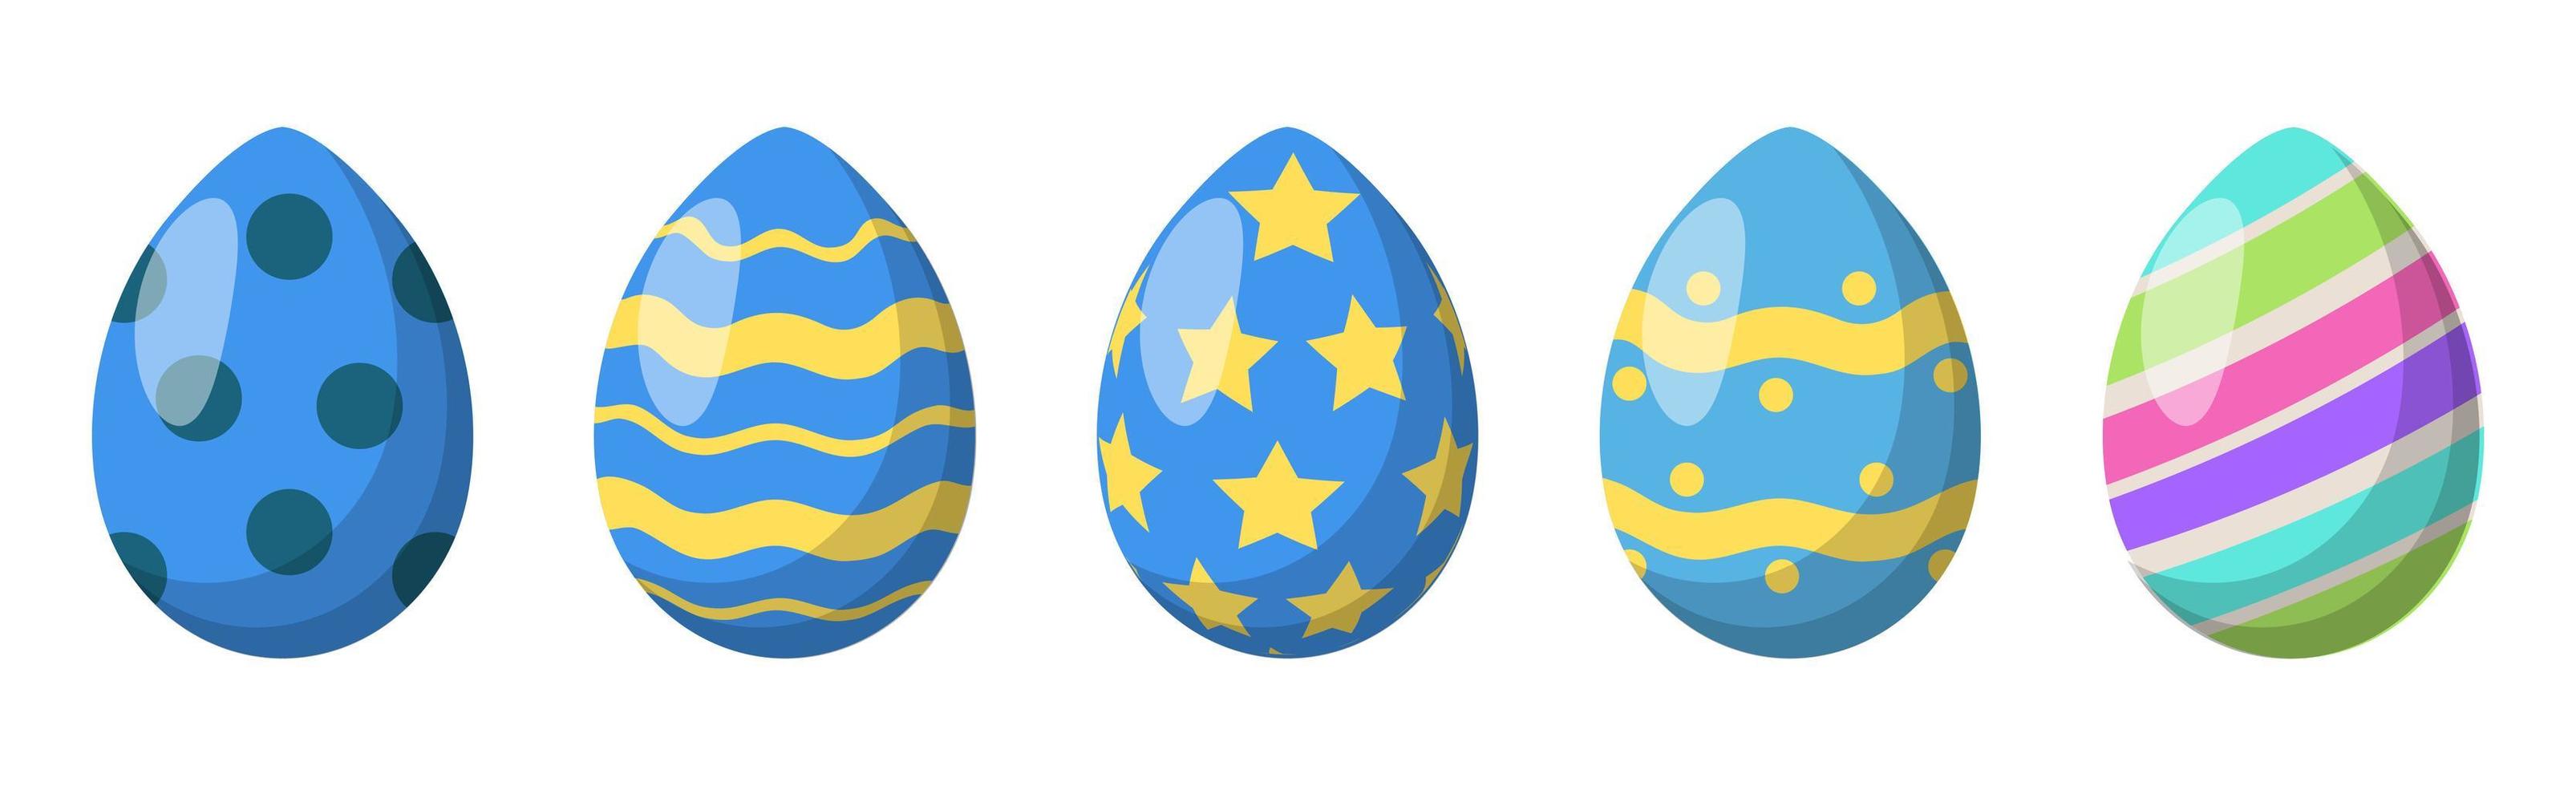 set di 5 diverse uova di Pasqua colorate - vettore